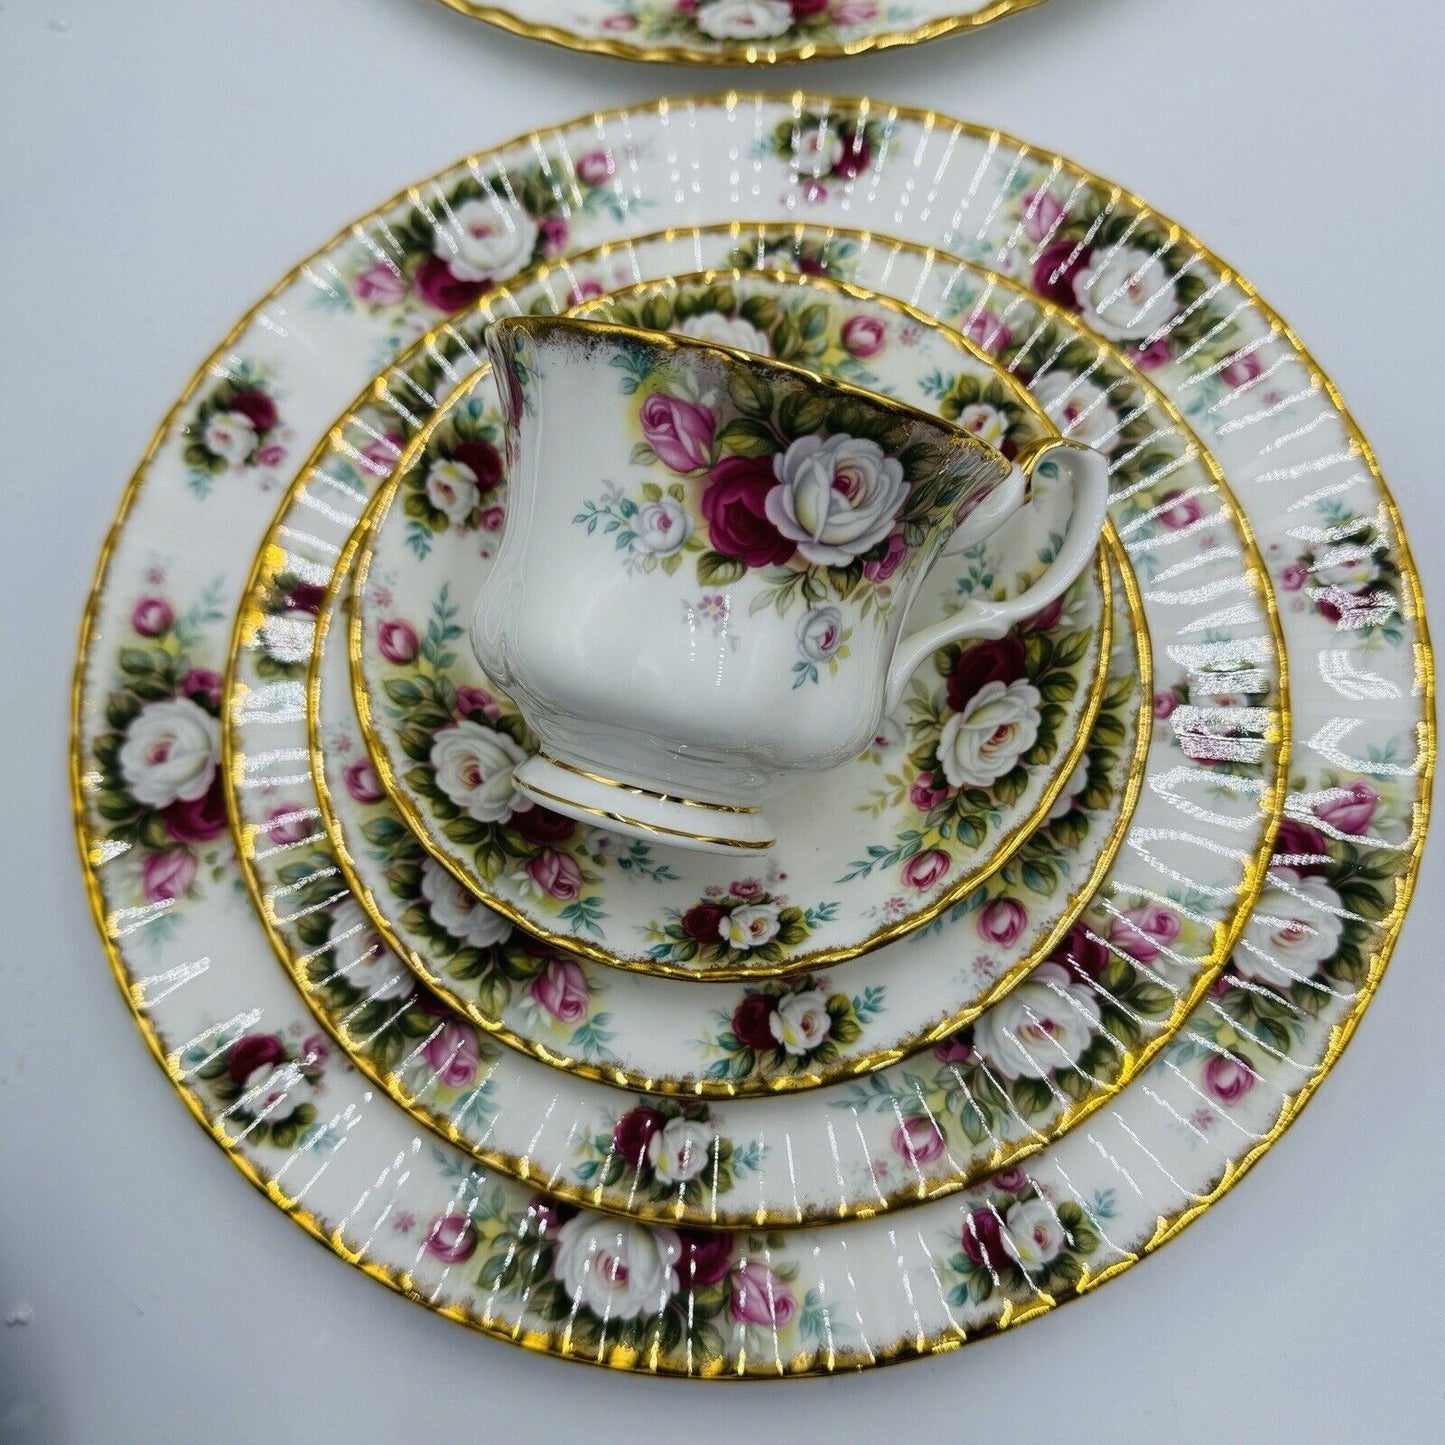 Vintage Royal Albert Bone China Celebration England 20 Pcs Floral Dinner Plates